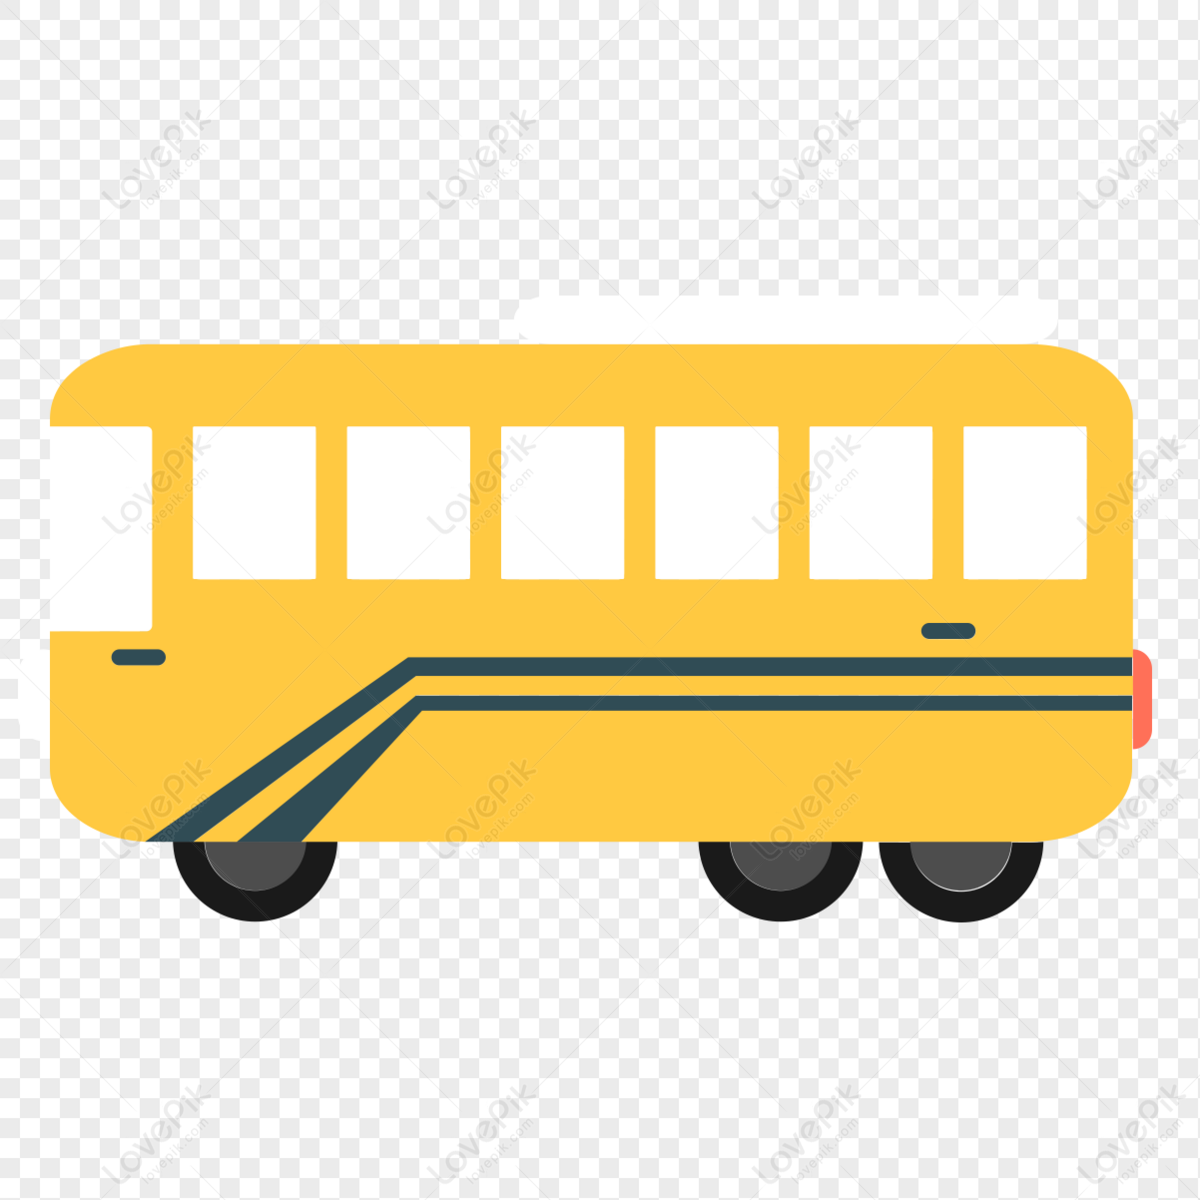 Vehicle bus icon free vector illustration material, material, icon, free materials png free download